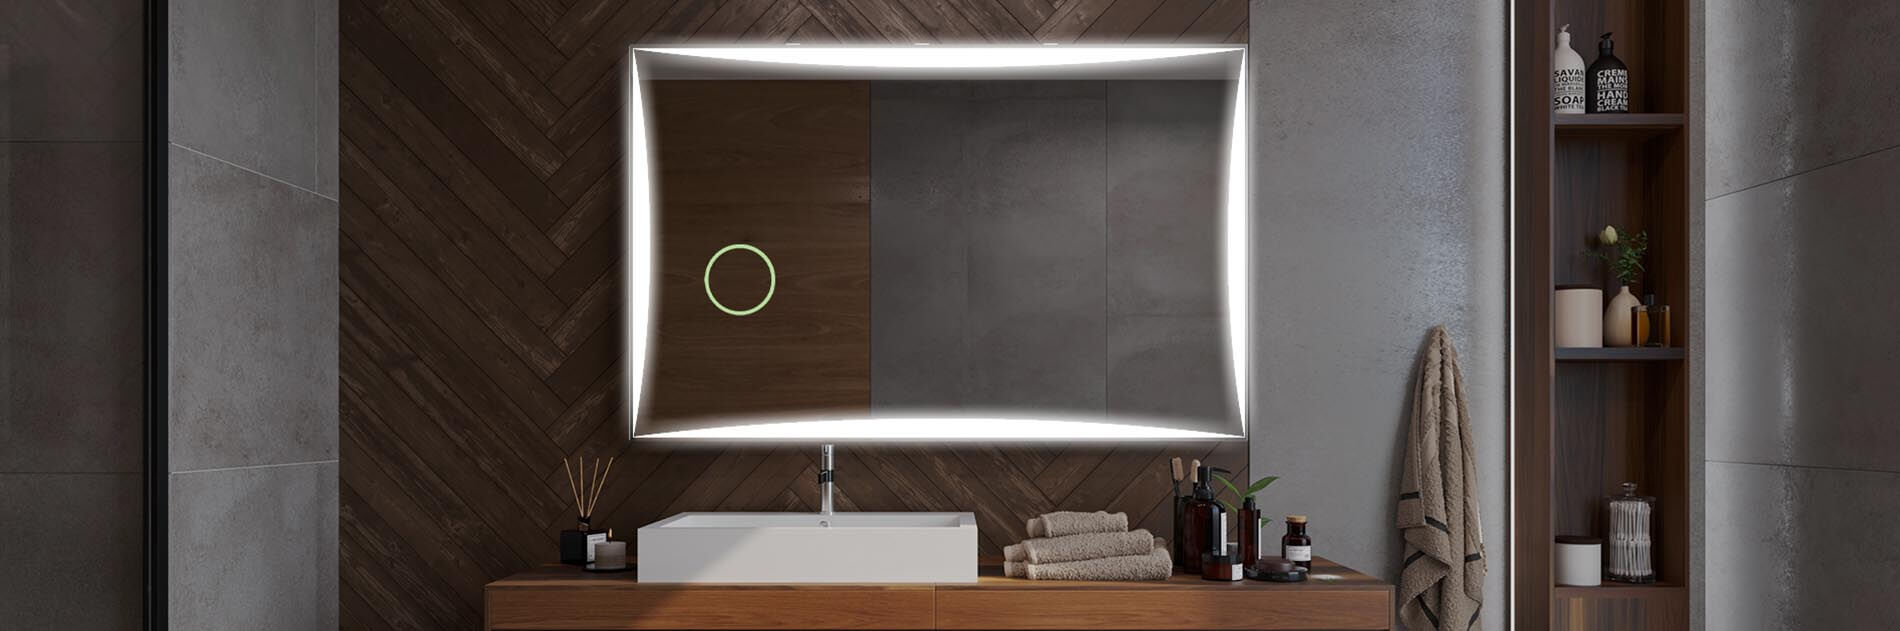 Backlight LED Mirror Tailored Lighting Bathroom l77 